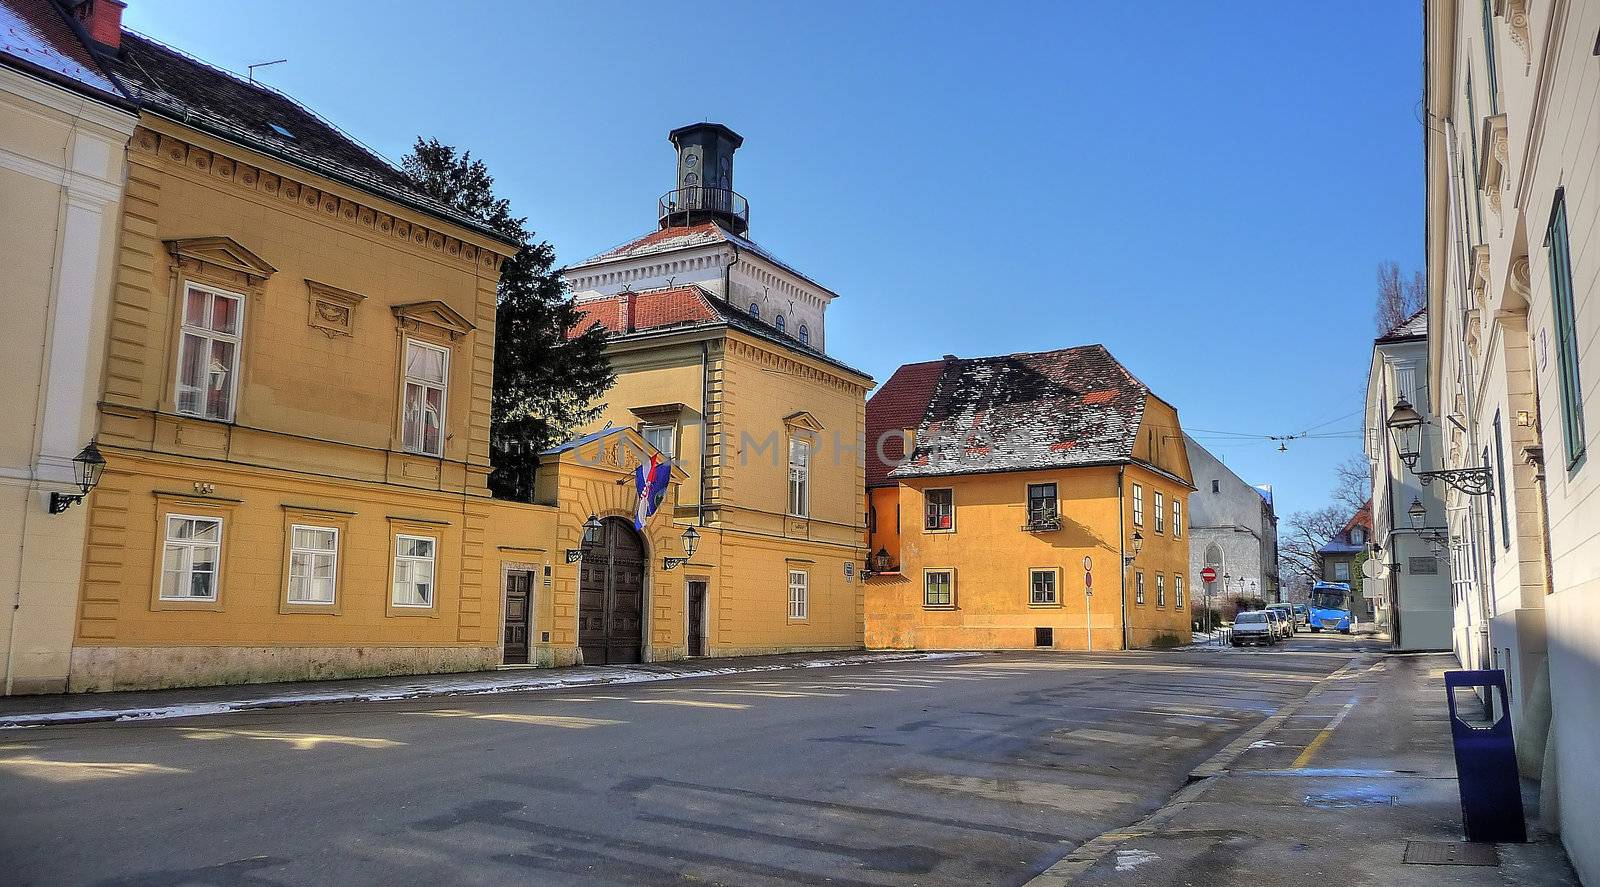 City of Zagreb historic upper town, Capital of Croatia